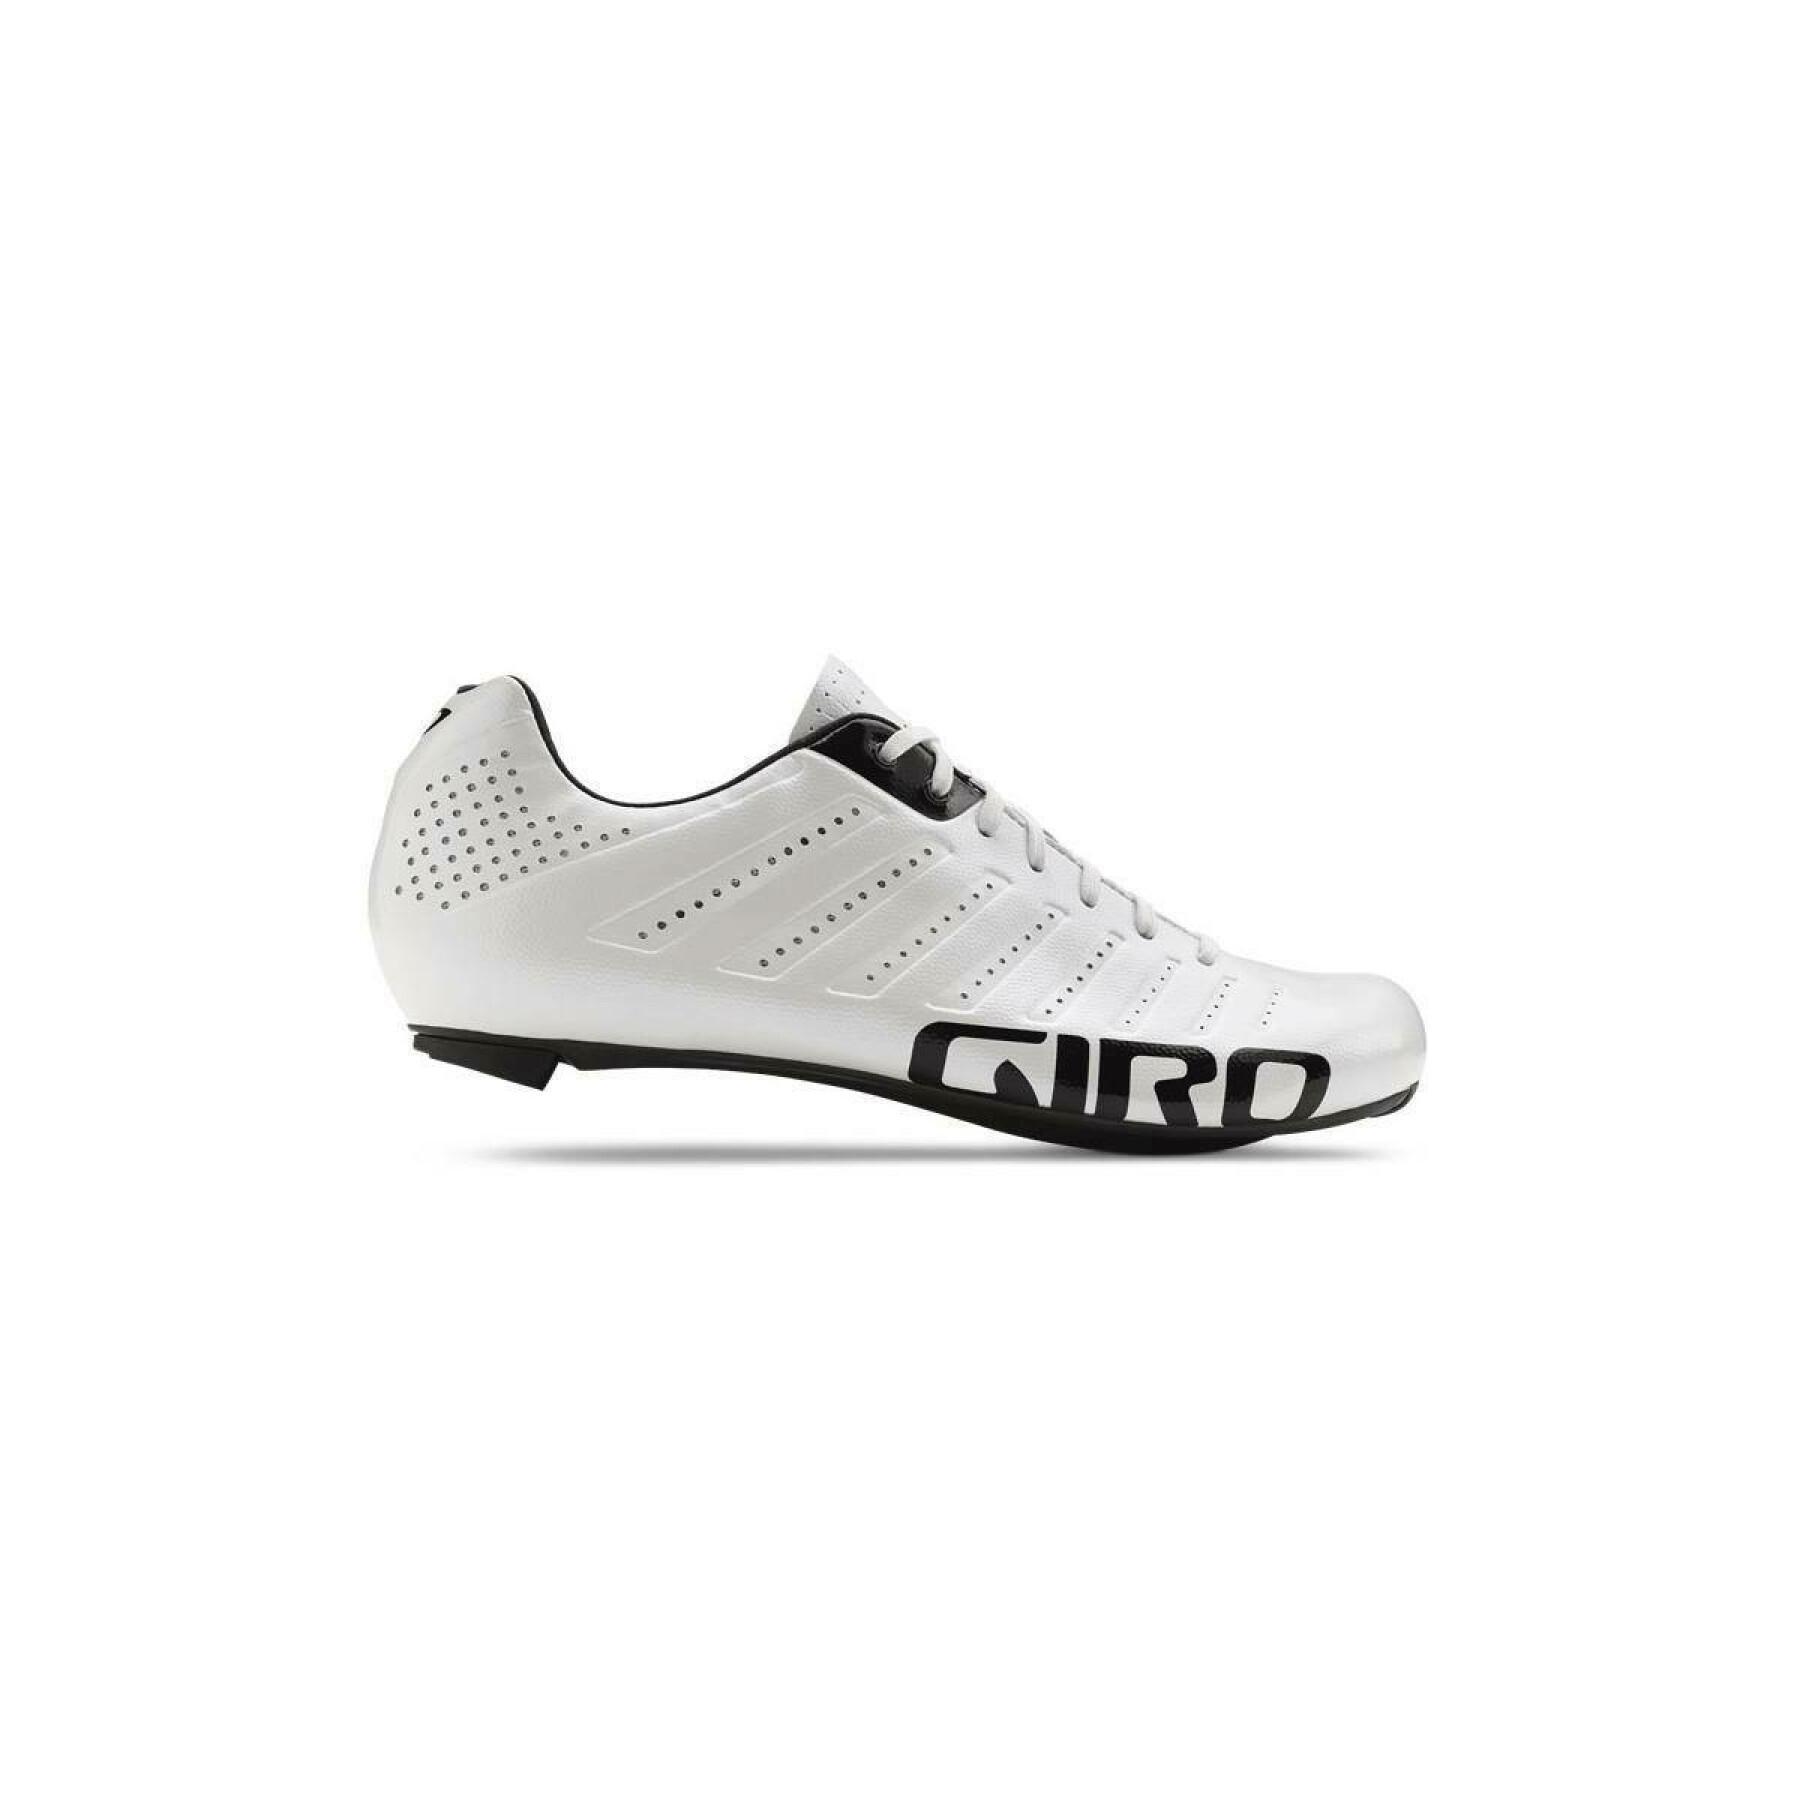 Schuhe Giro Empire Slx